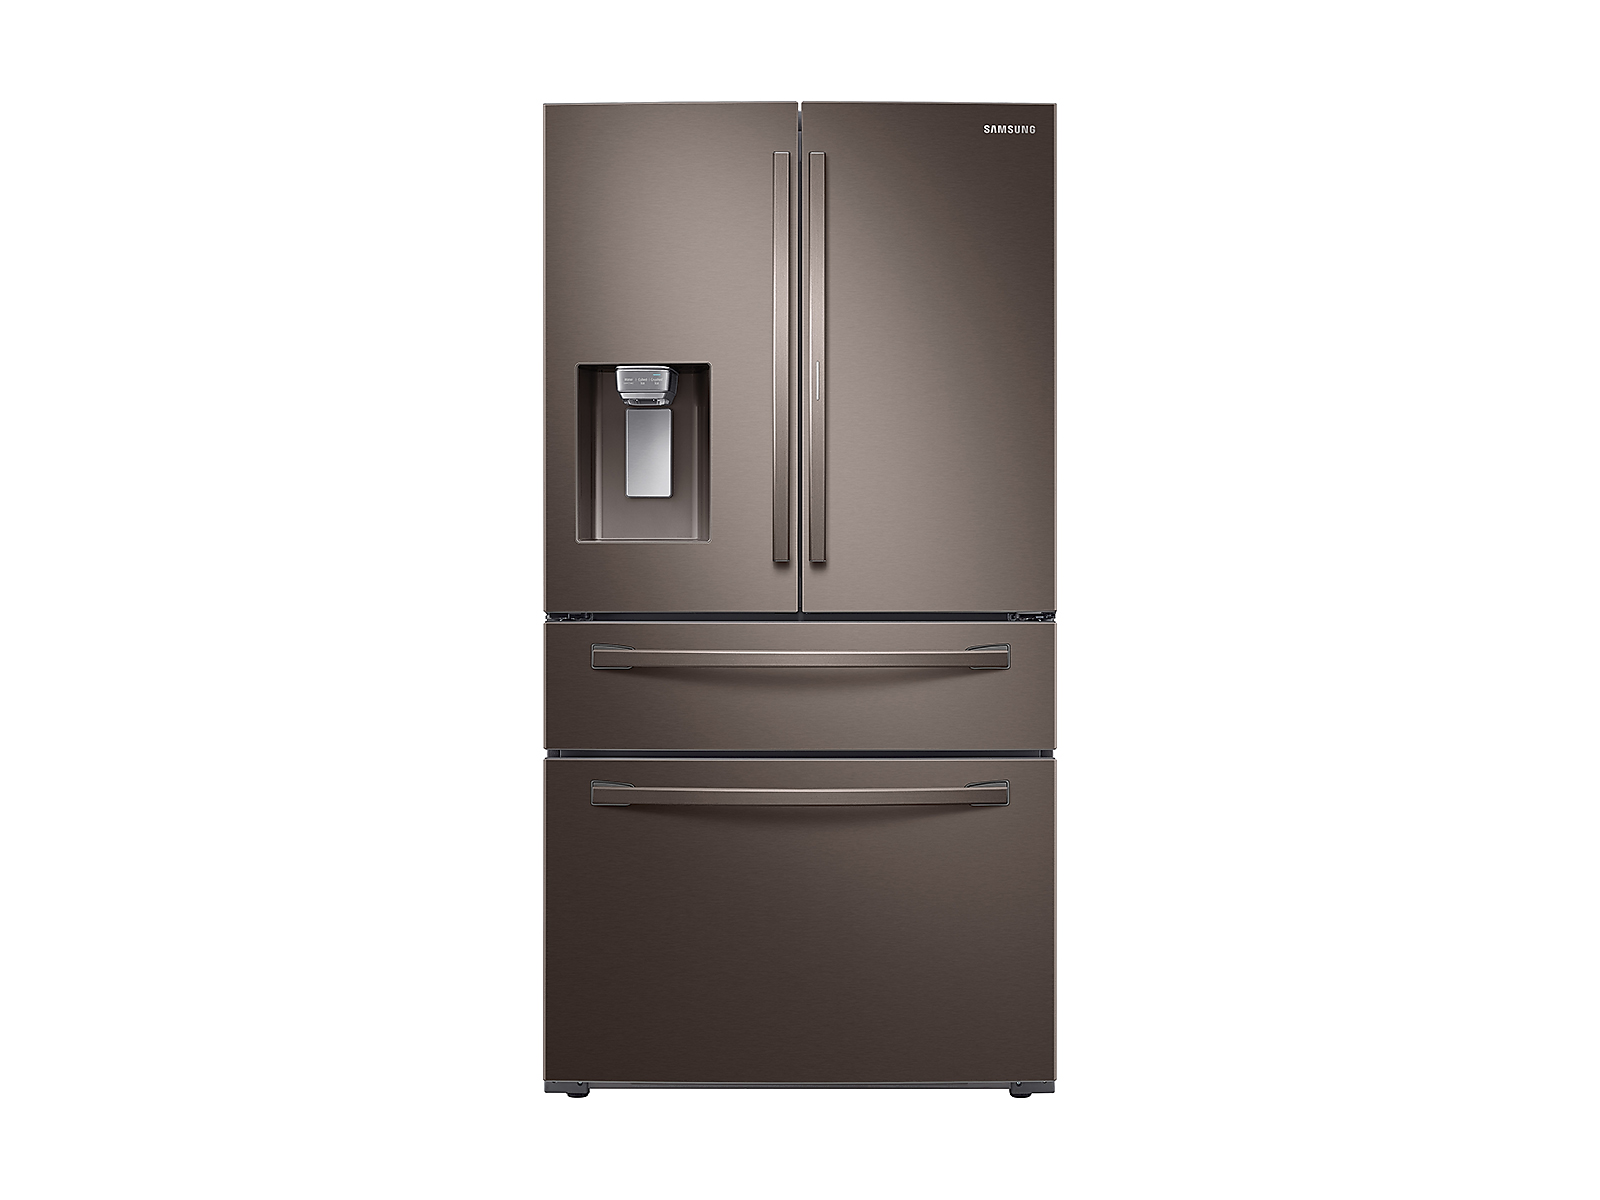 Samsung 28 cu. ft. Food Showcase 4-Door French Door Refrigerator in Tuscan Stainless Steel(RF28R7351DT/AA)